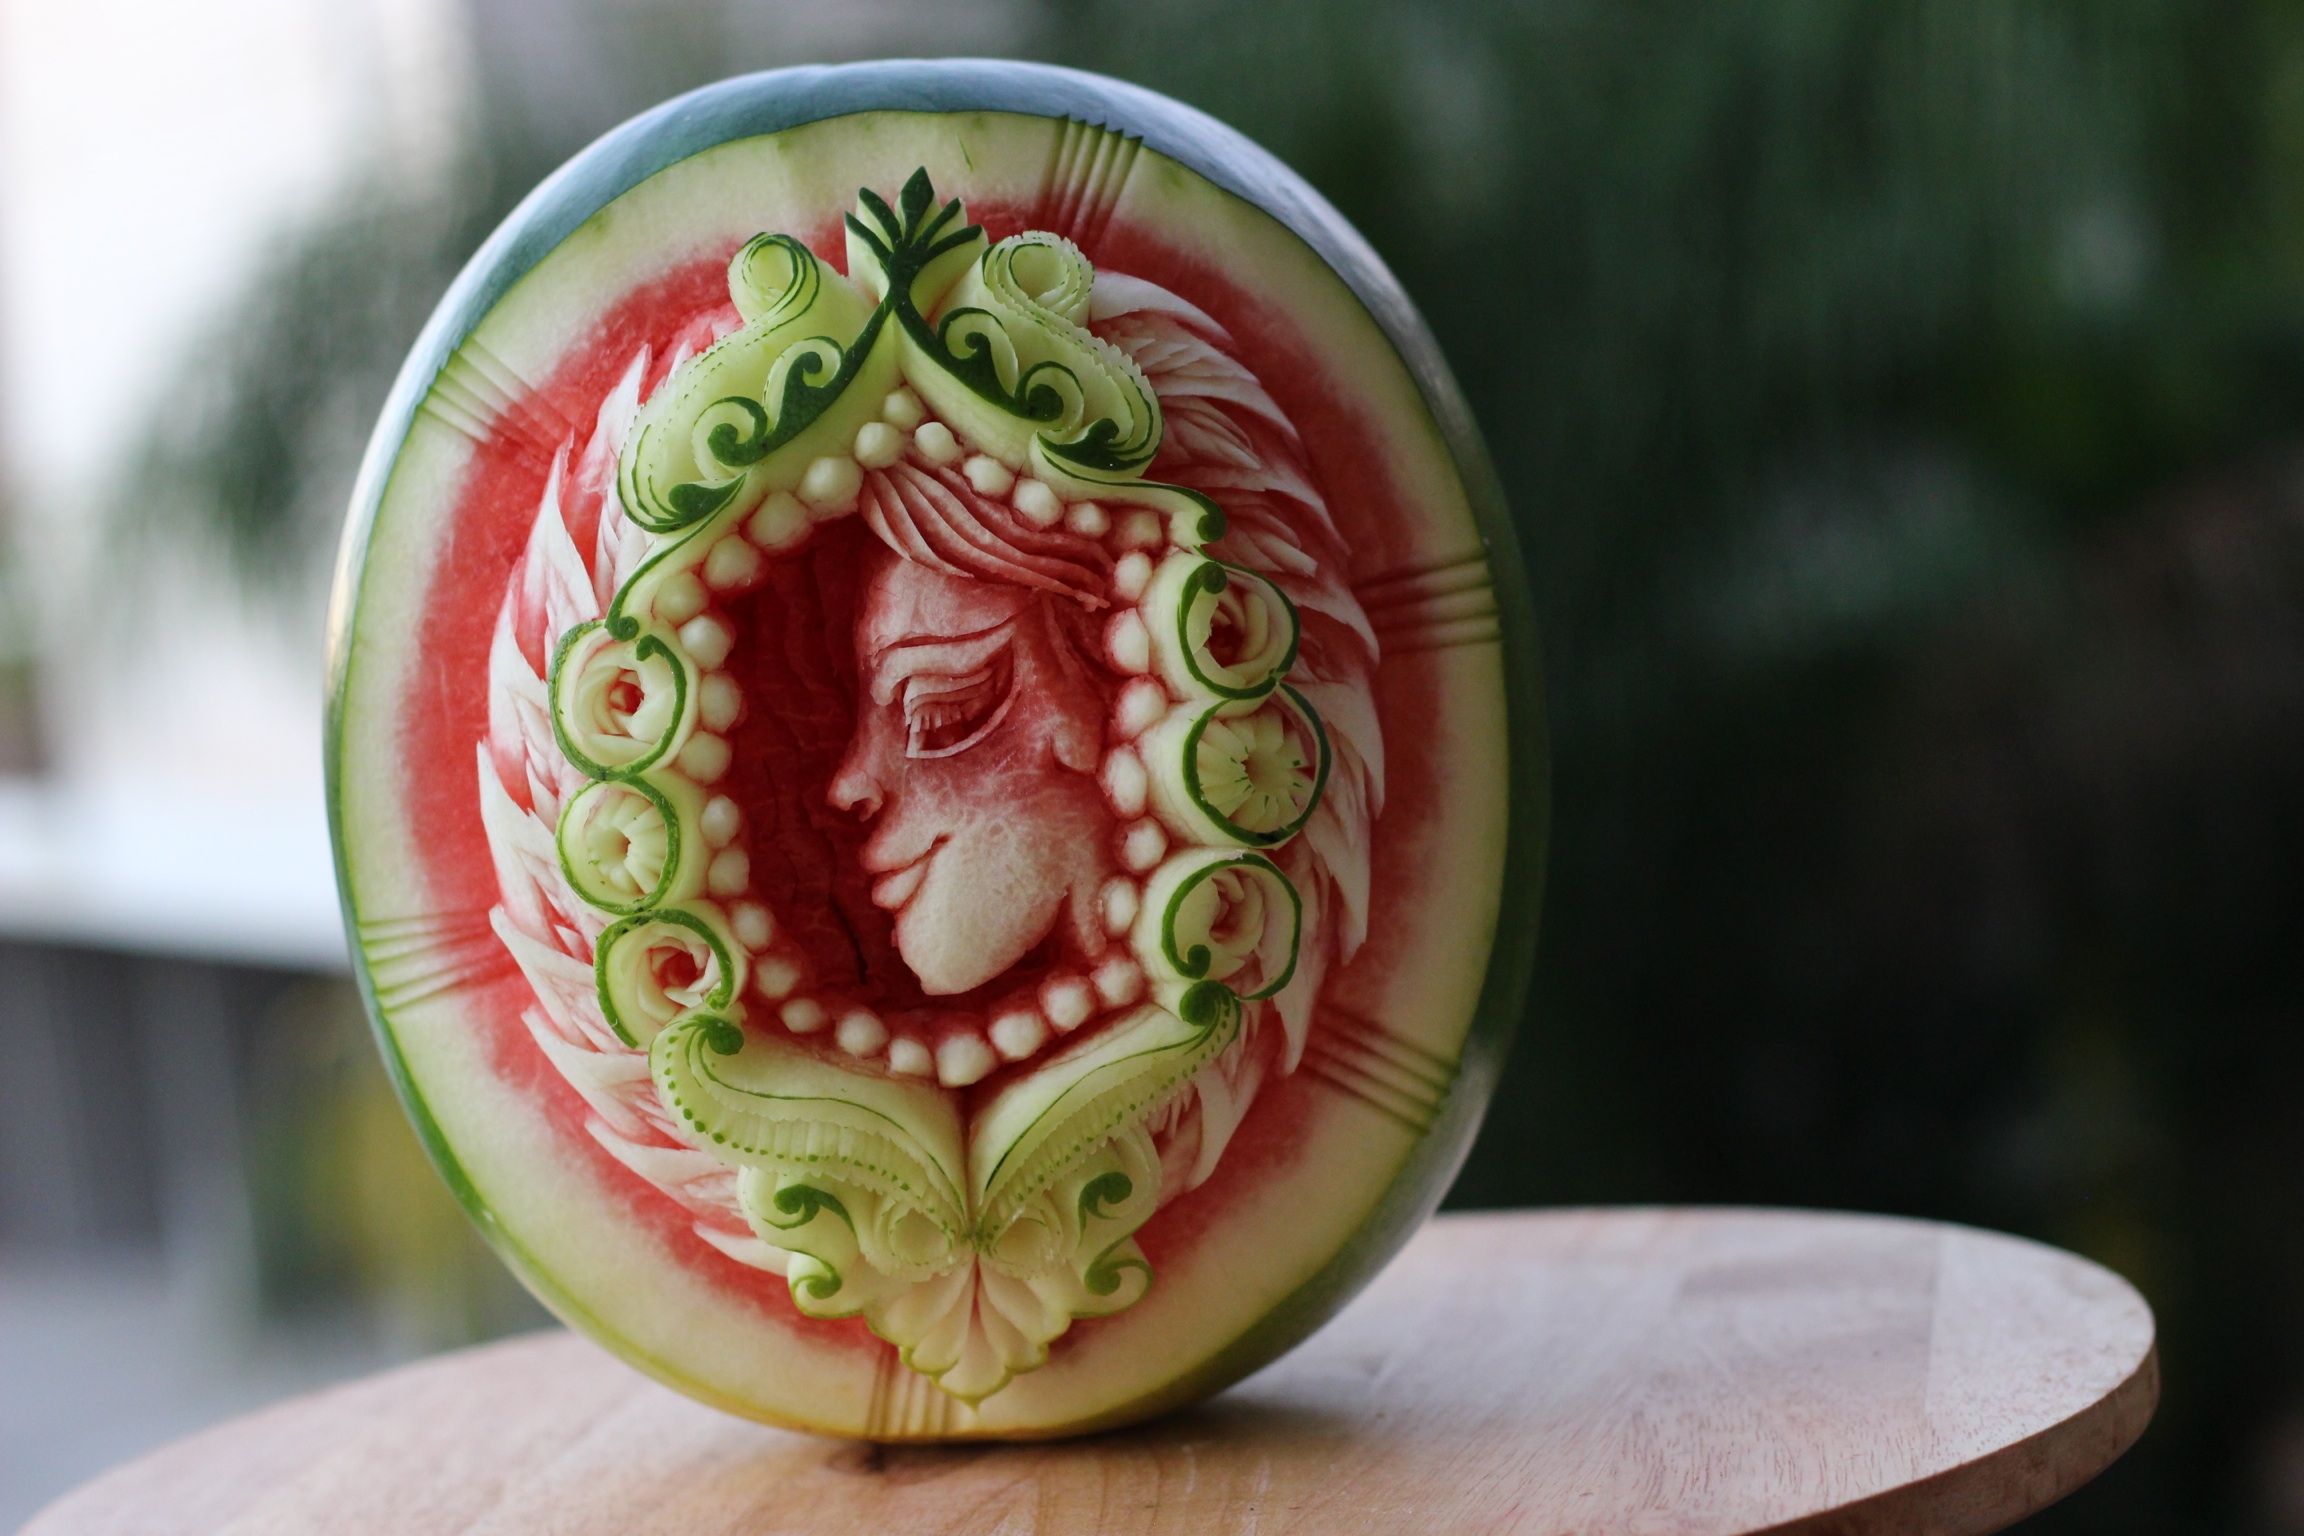 This watermelon art : oddlysatisfying